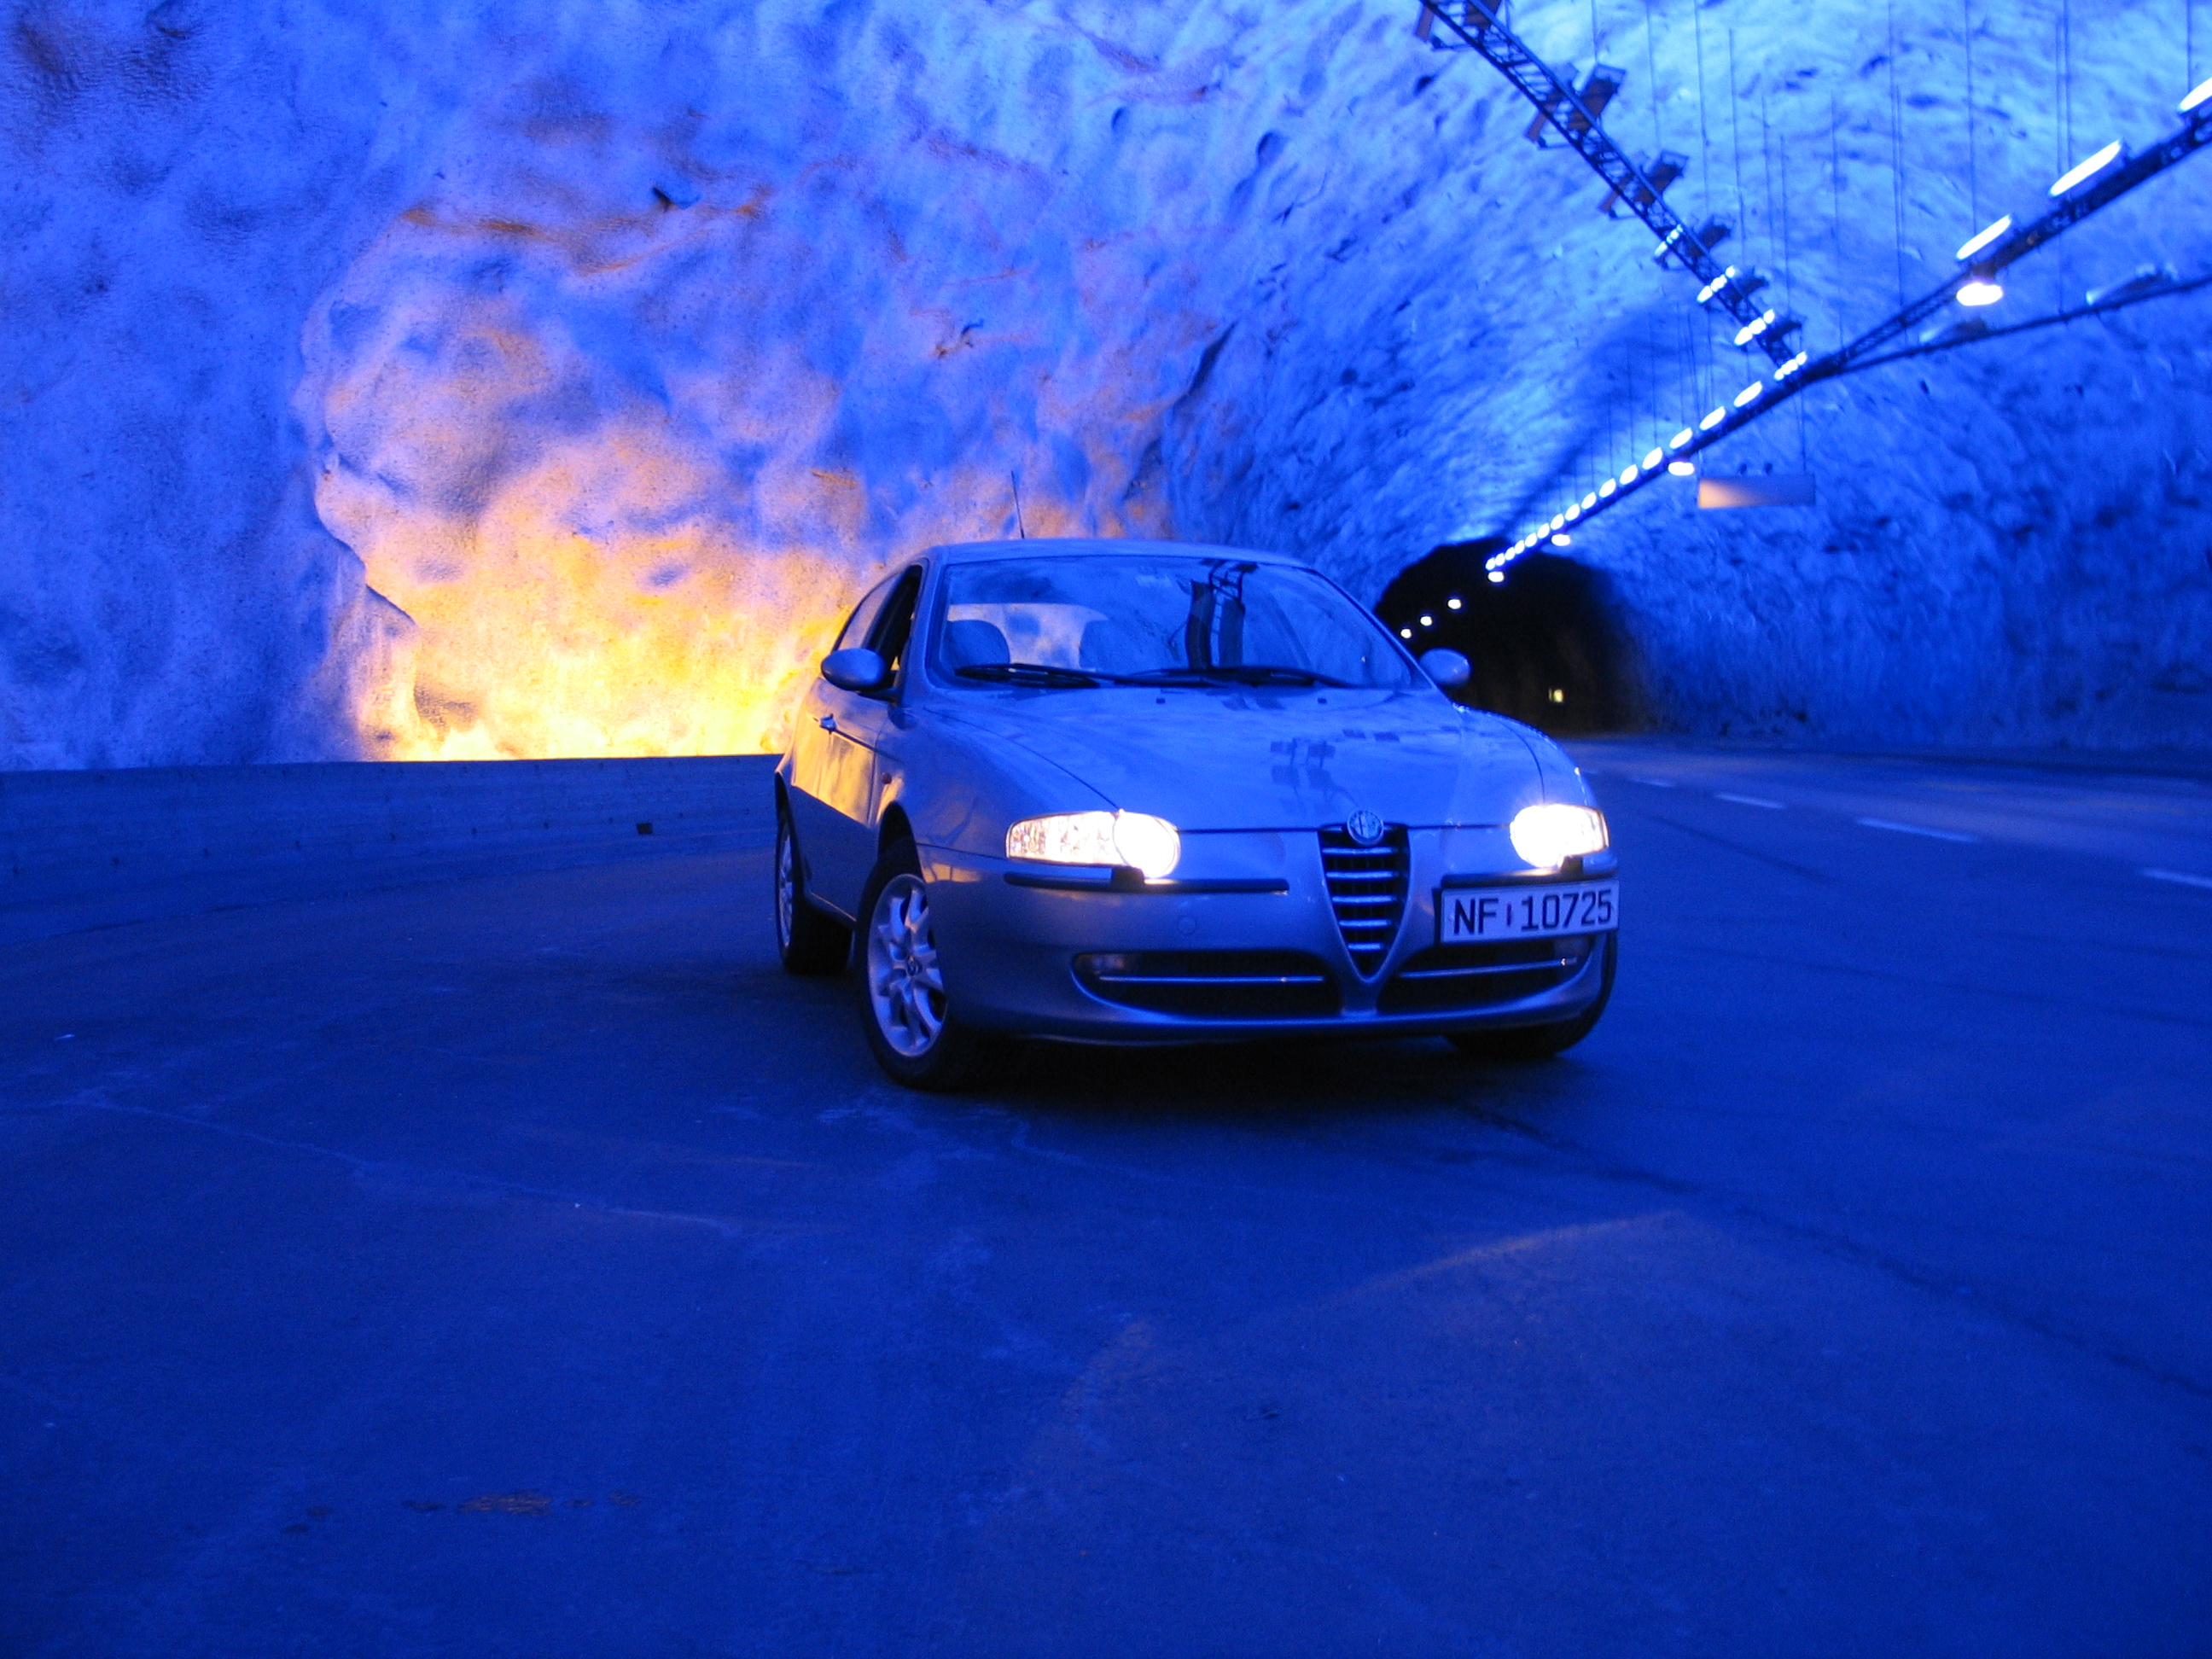 File:Alfa Romeo 147 tunnel.JPG - Wikipedia